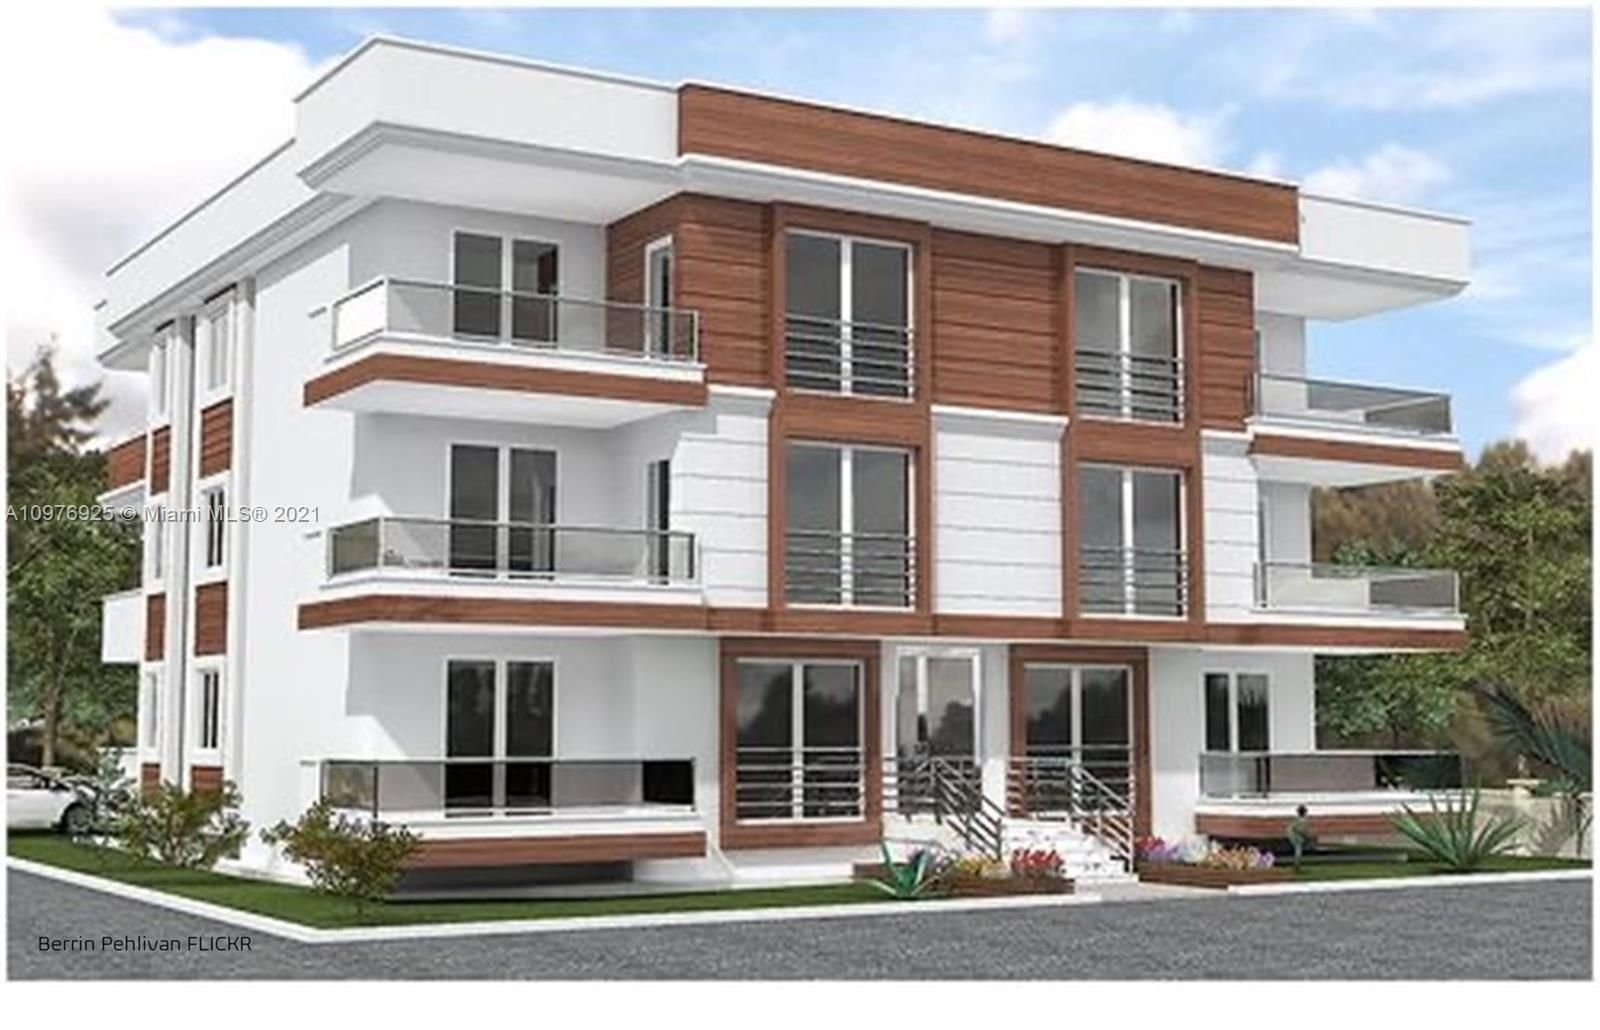 Real estate property located at 813 29th St, Miami-Dade County, Miami, FL